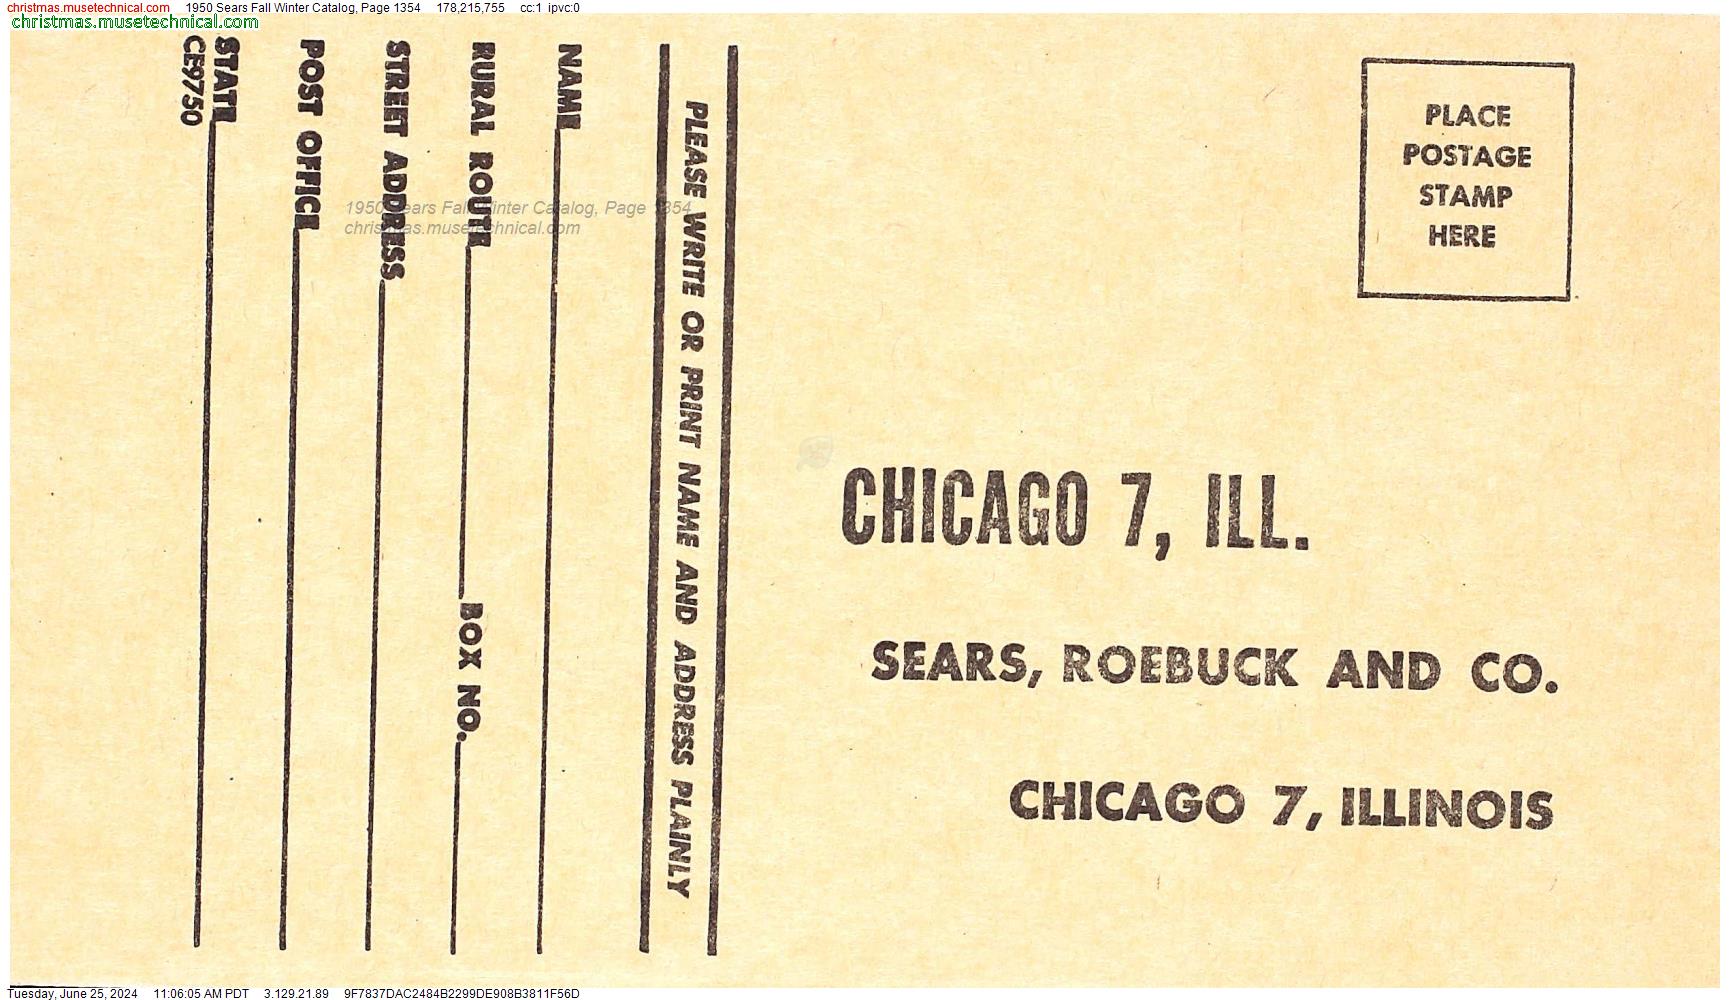 1950 Sears Fall Winter Catalog, Page 1354